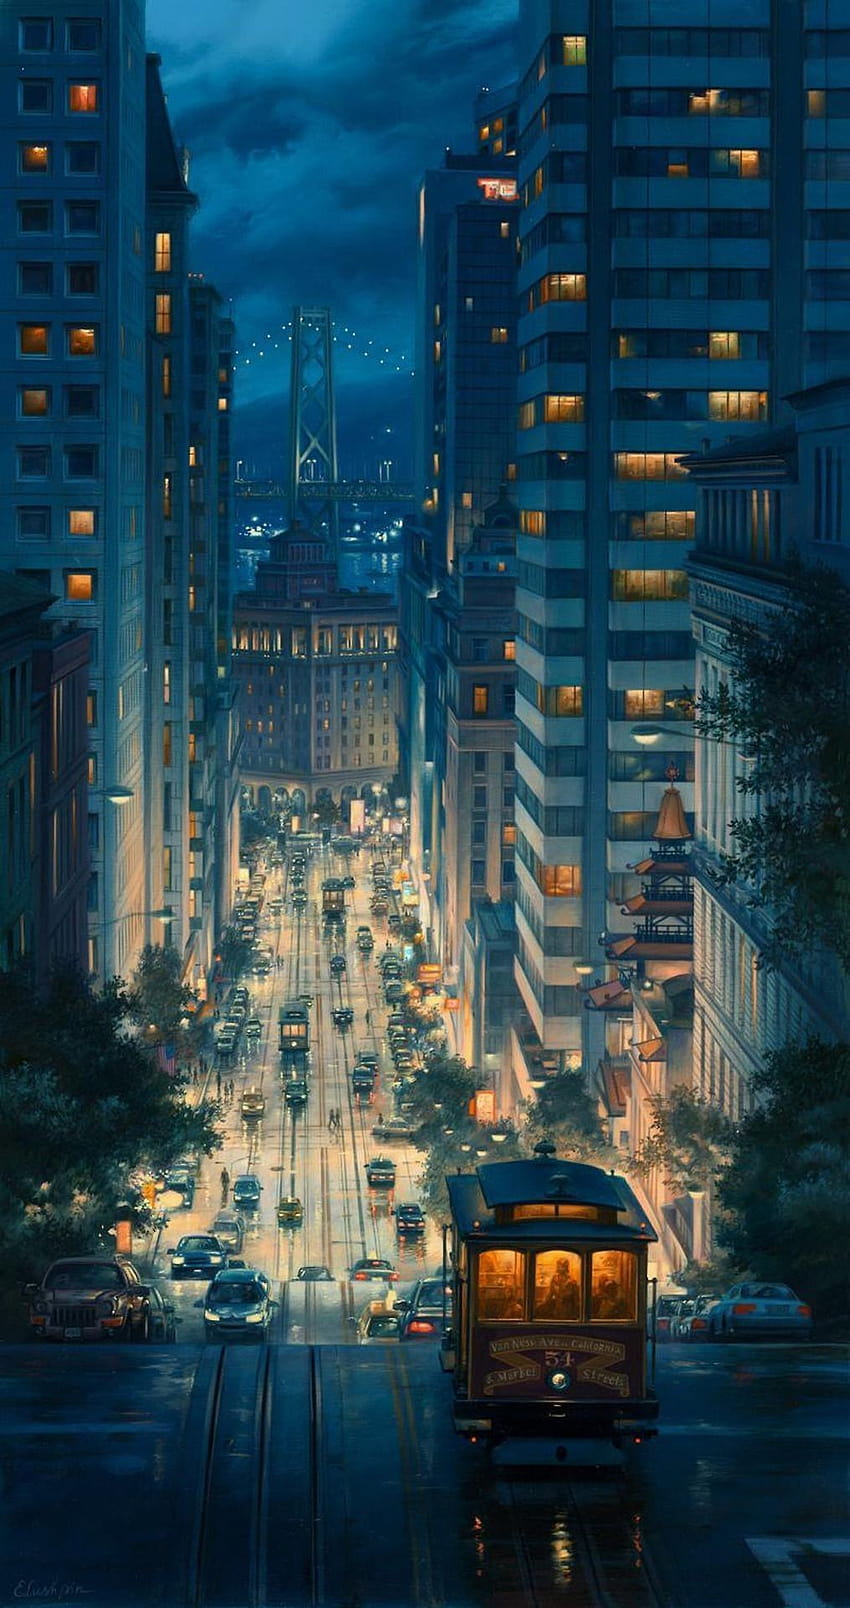 Anime Street on Dog, teléfono de la ciudad de la noche del anime fondo de pantalla del teléfono